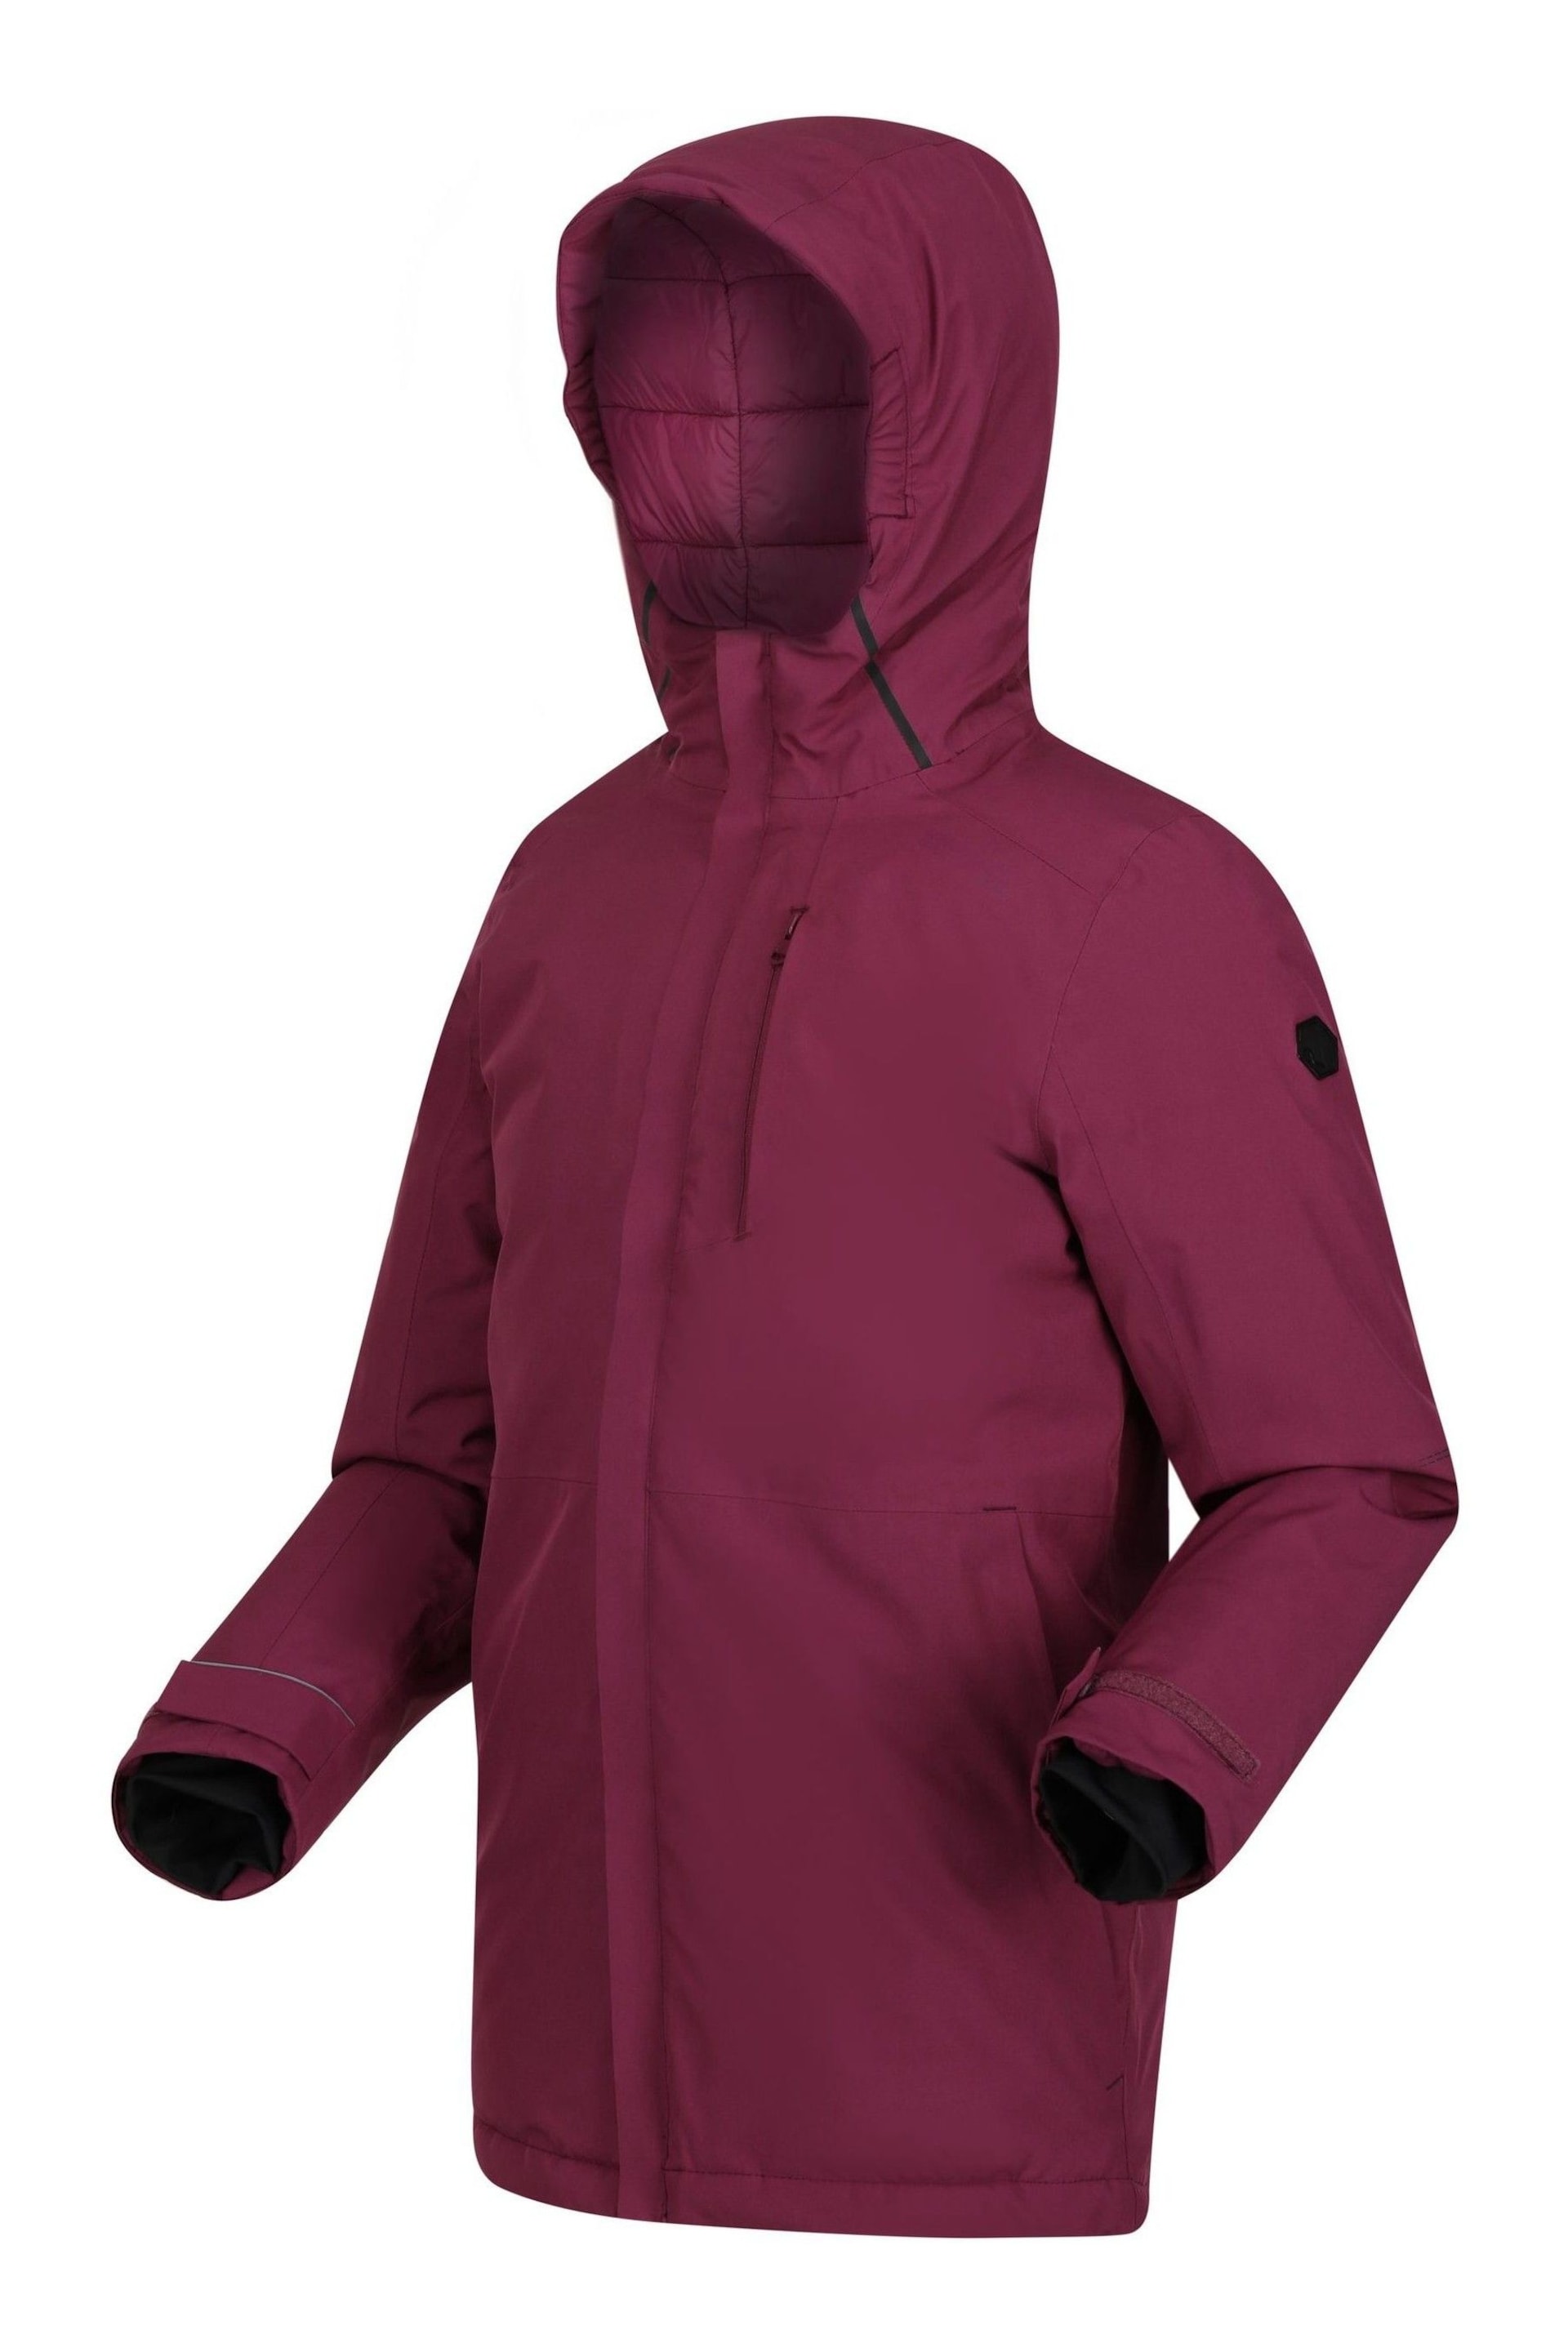 Regatta Purple Junior Yewbank Waterproof Jacket - Image 6 of 7